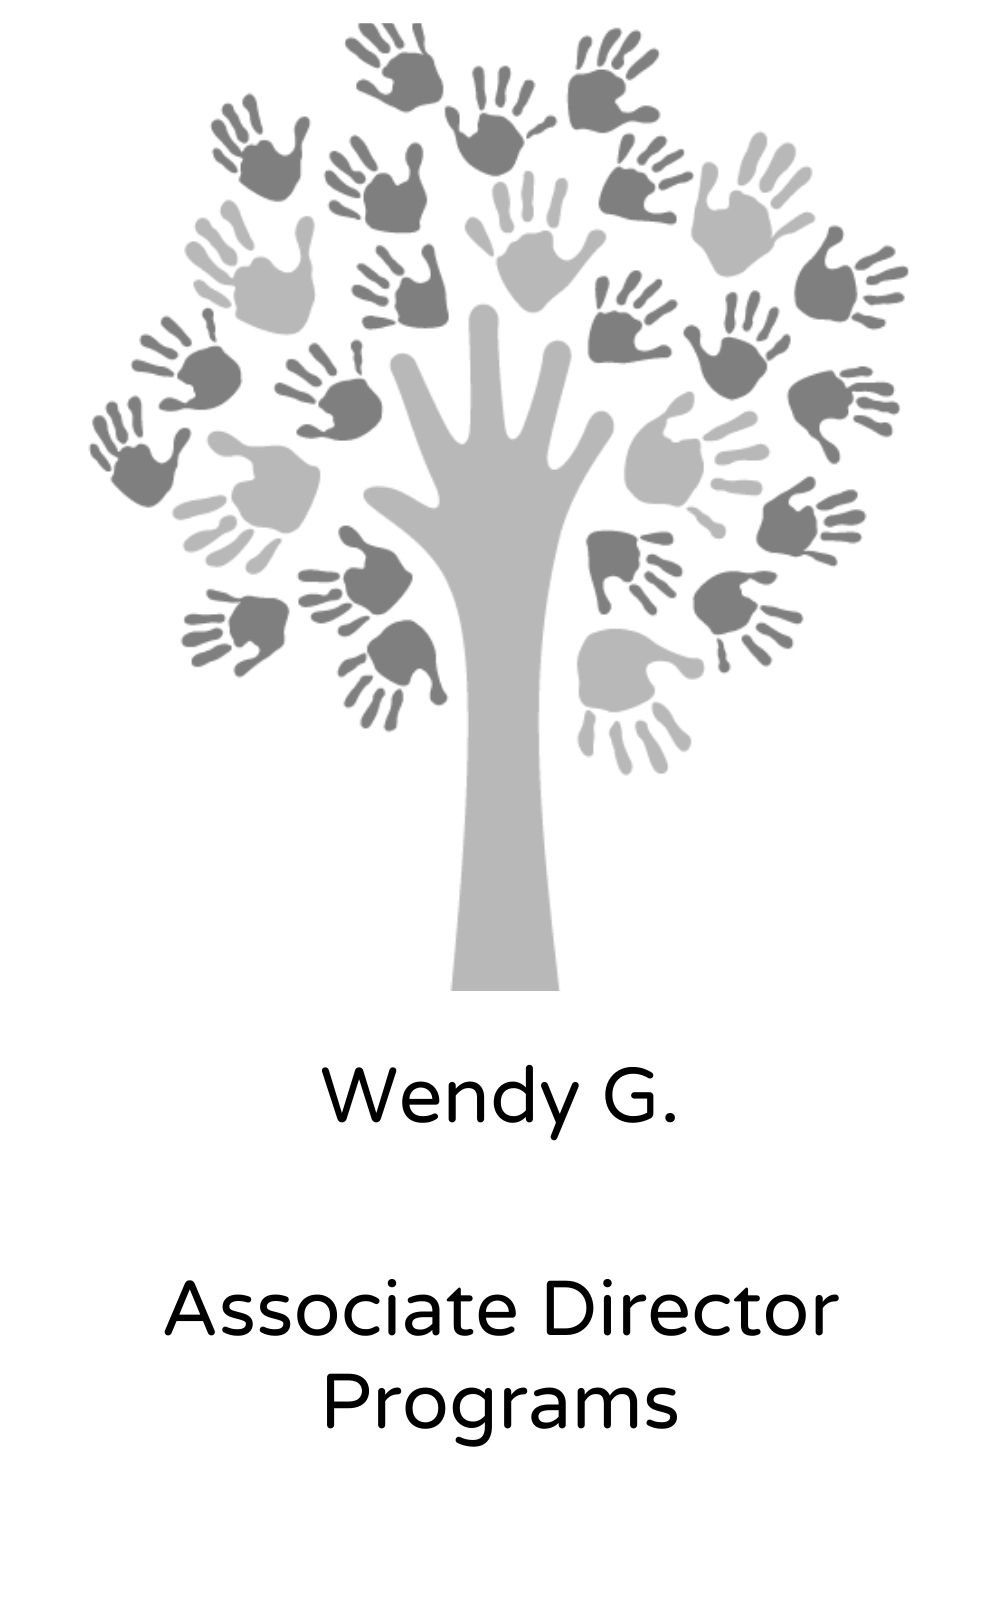 Wendy G, Associate Director, Programs